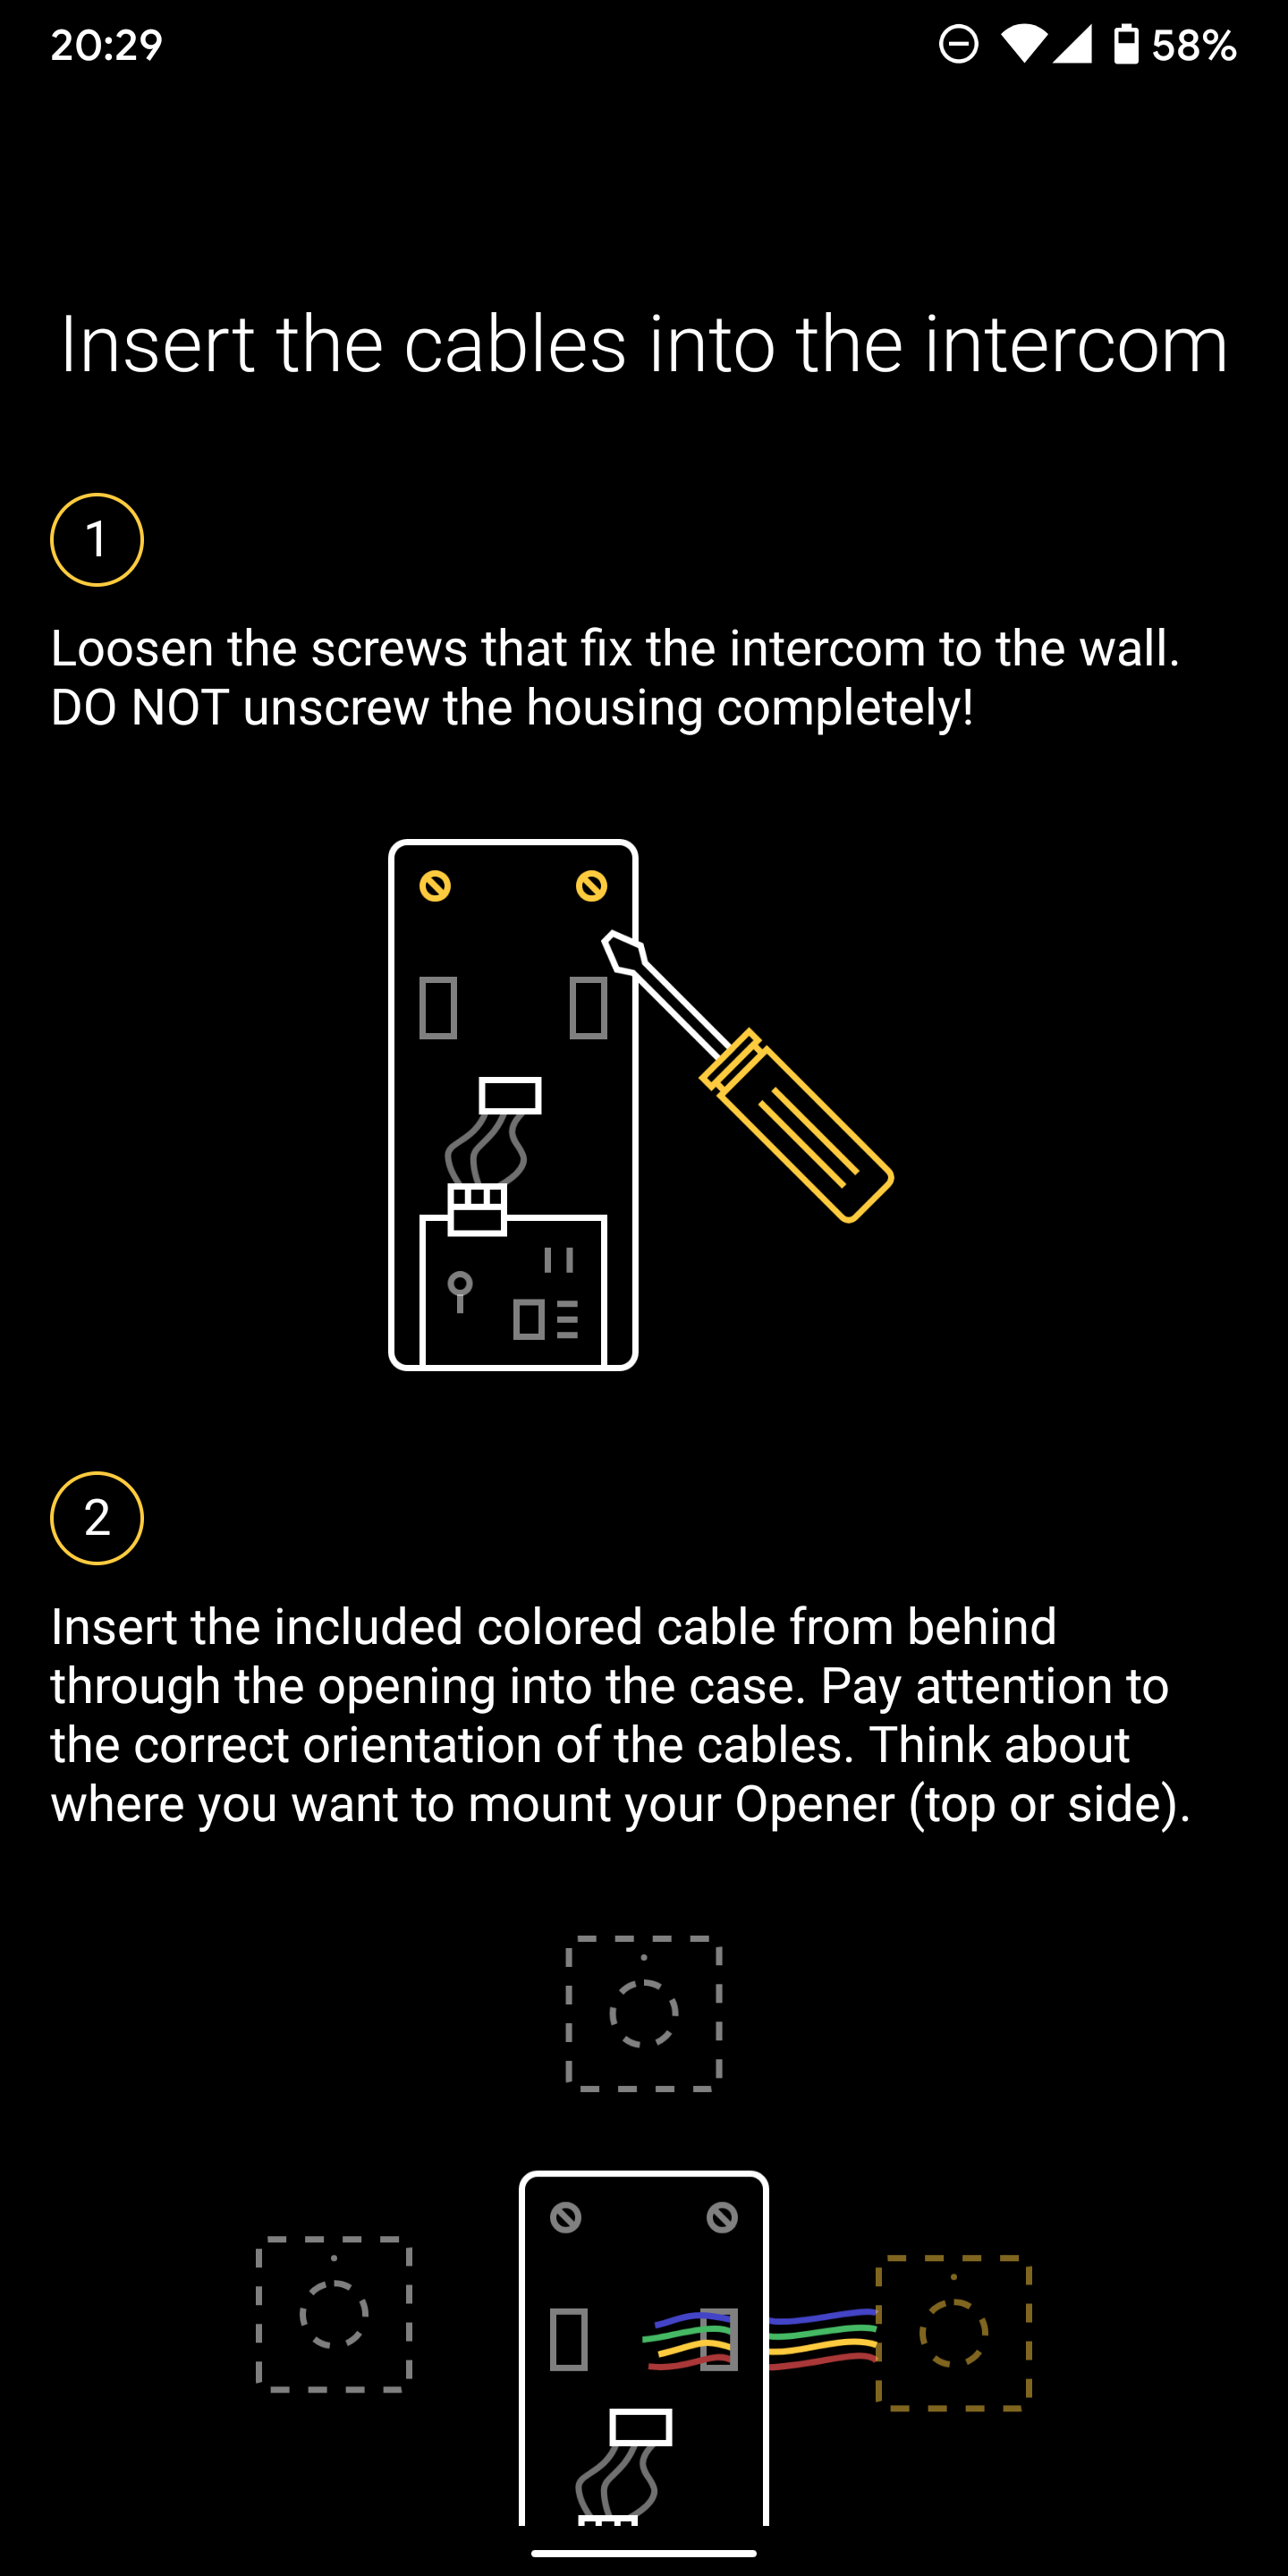 Nuki Opener review: A smarter intercom to complement your smart lock